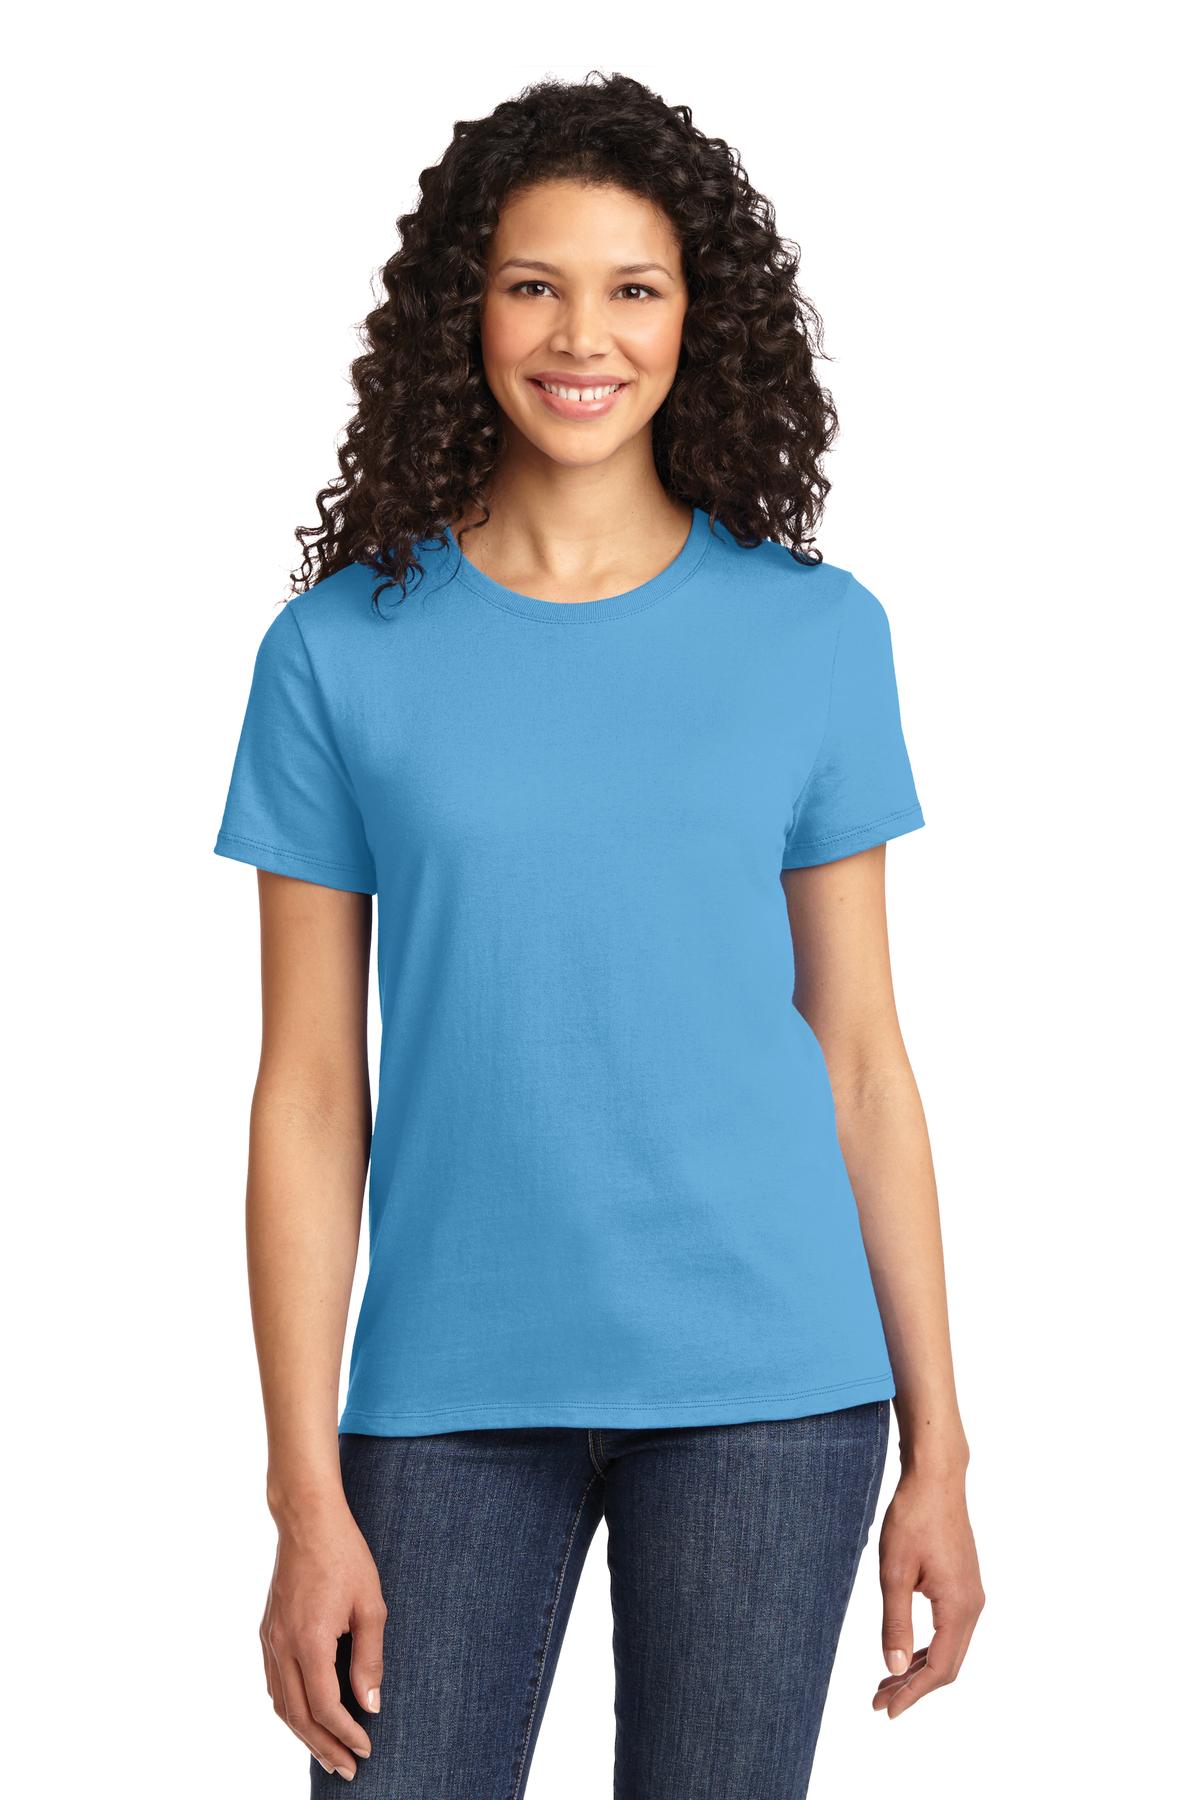 Port & Company - Ladies Essential T-Shirt - LPC61